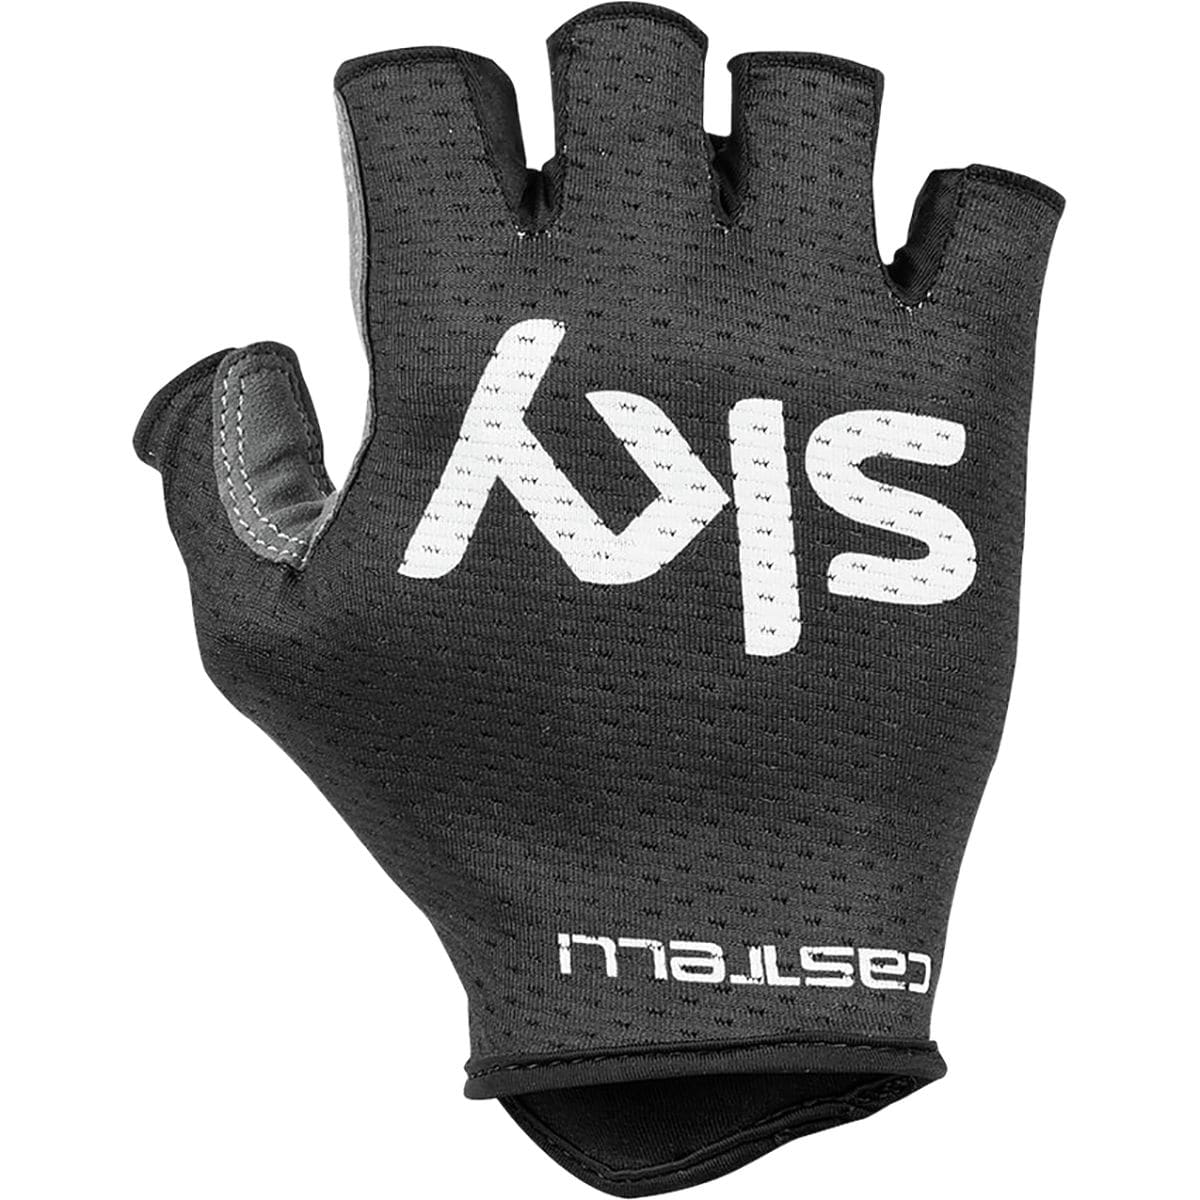 Castelli Team Sky Track MItts Glove - Men's